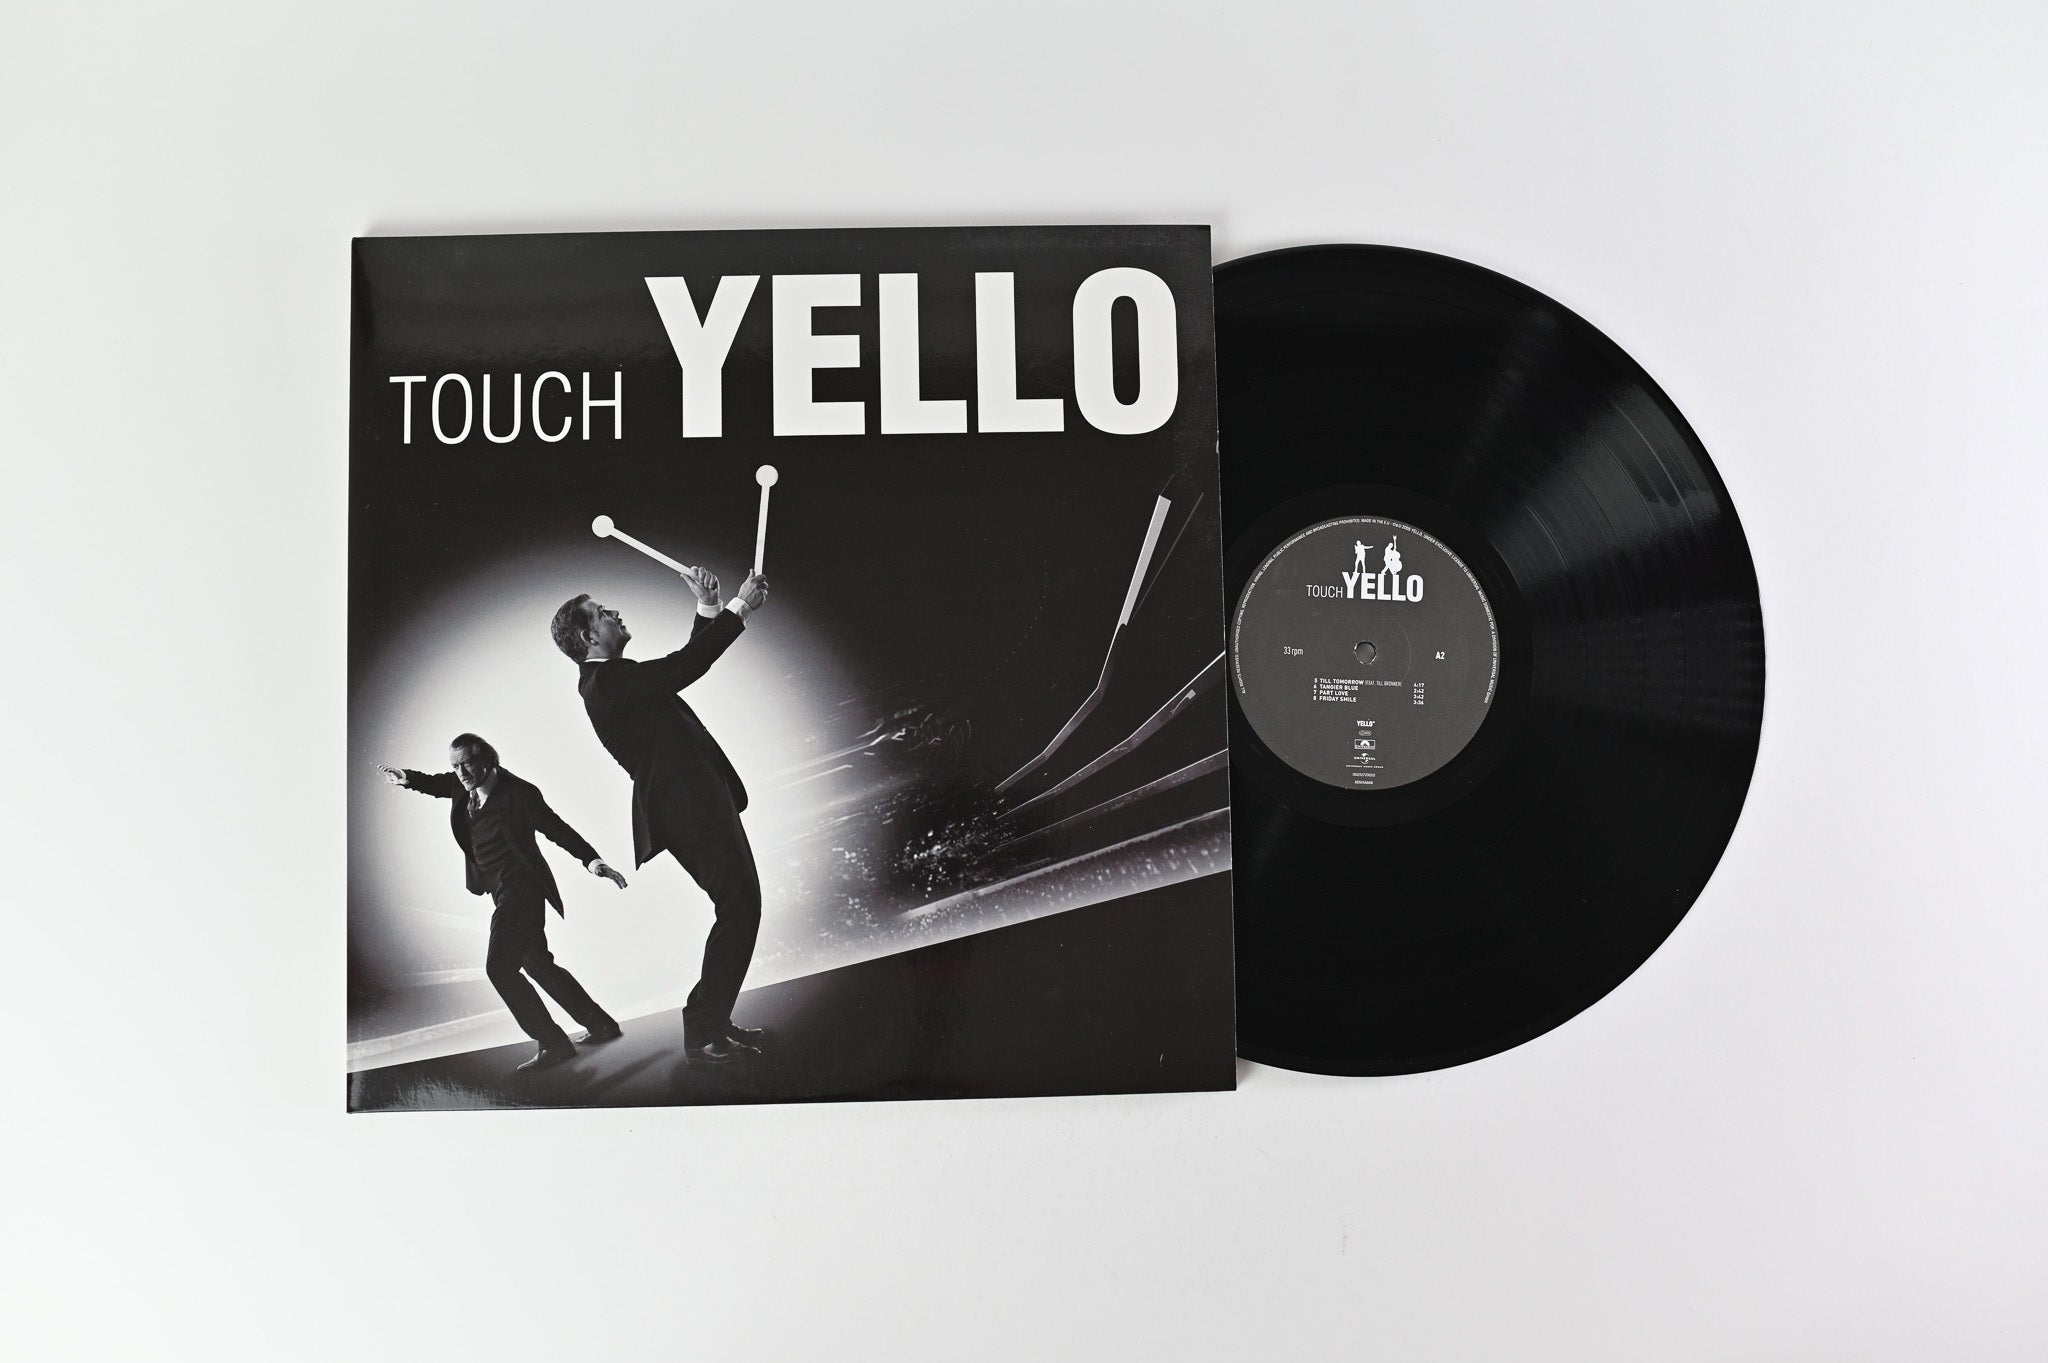 Yello - Touch Yello on Polydor